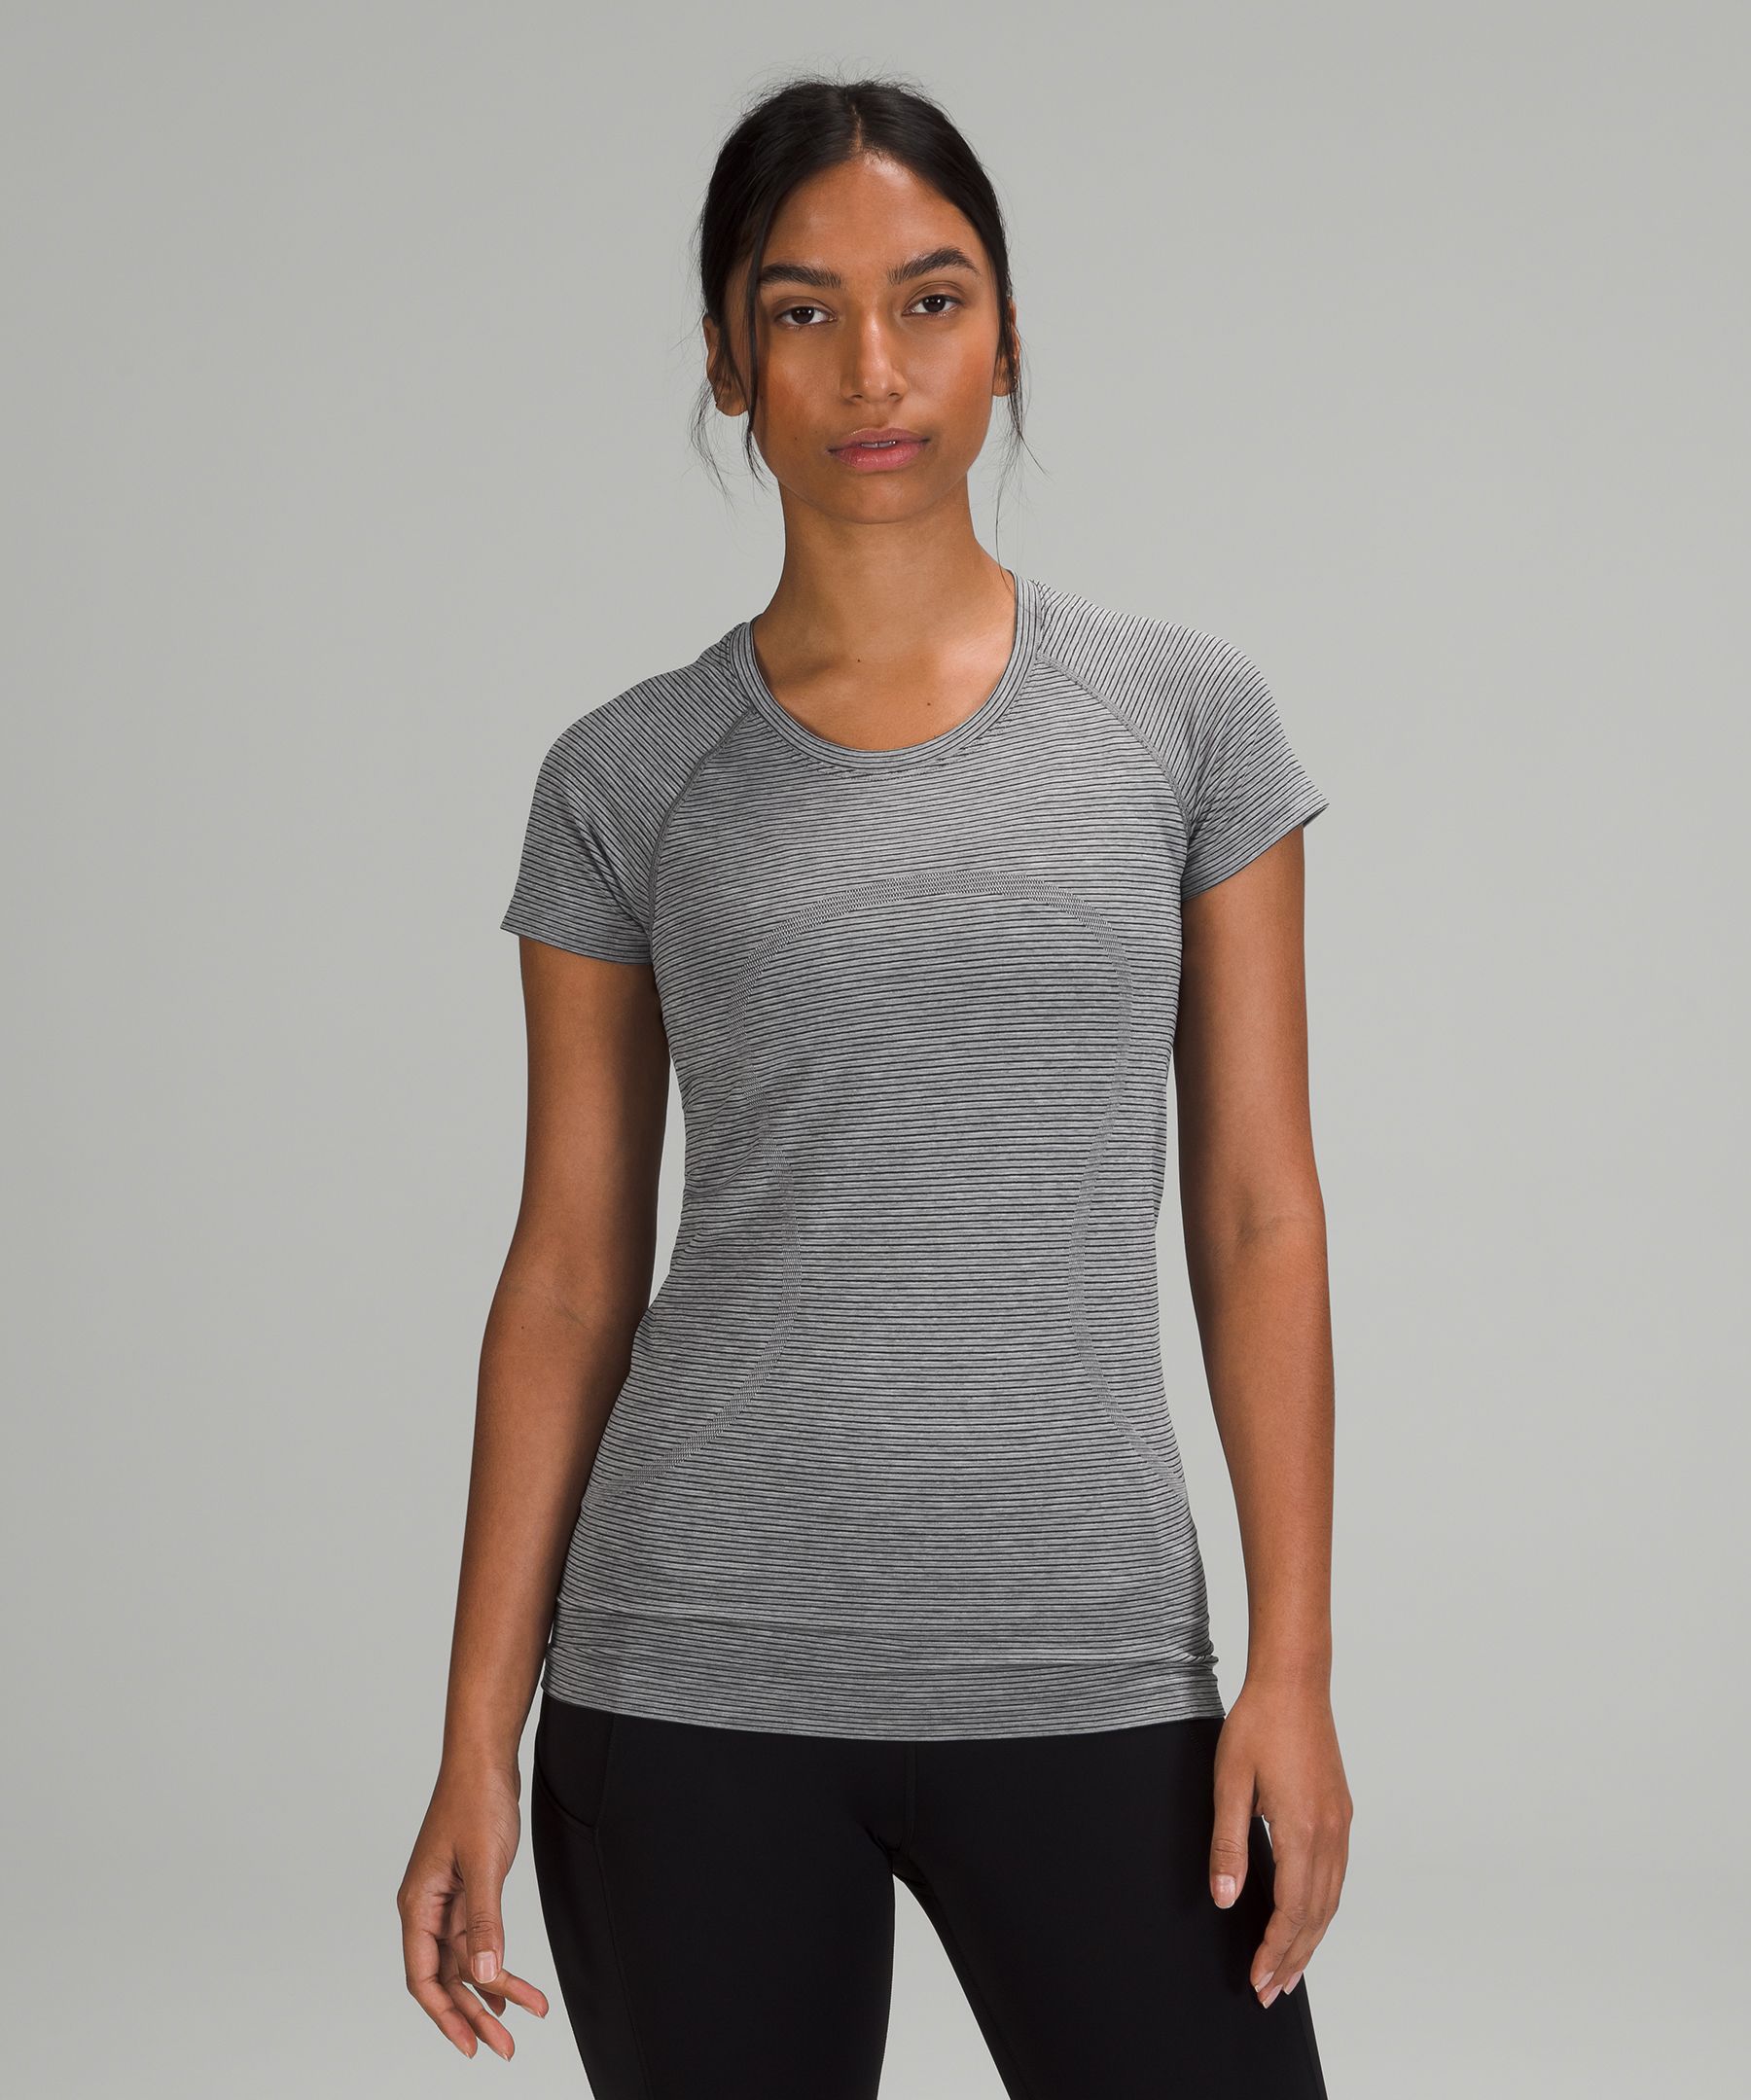 Lululemon Swiftly Tech Short Sleeve Shirt 2.0 In Tetra Stripe Asphalt Grey/black/alpine White